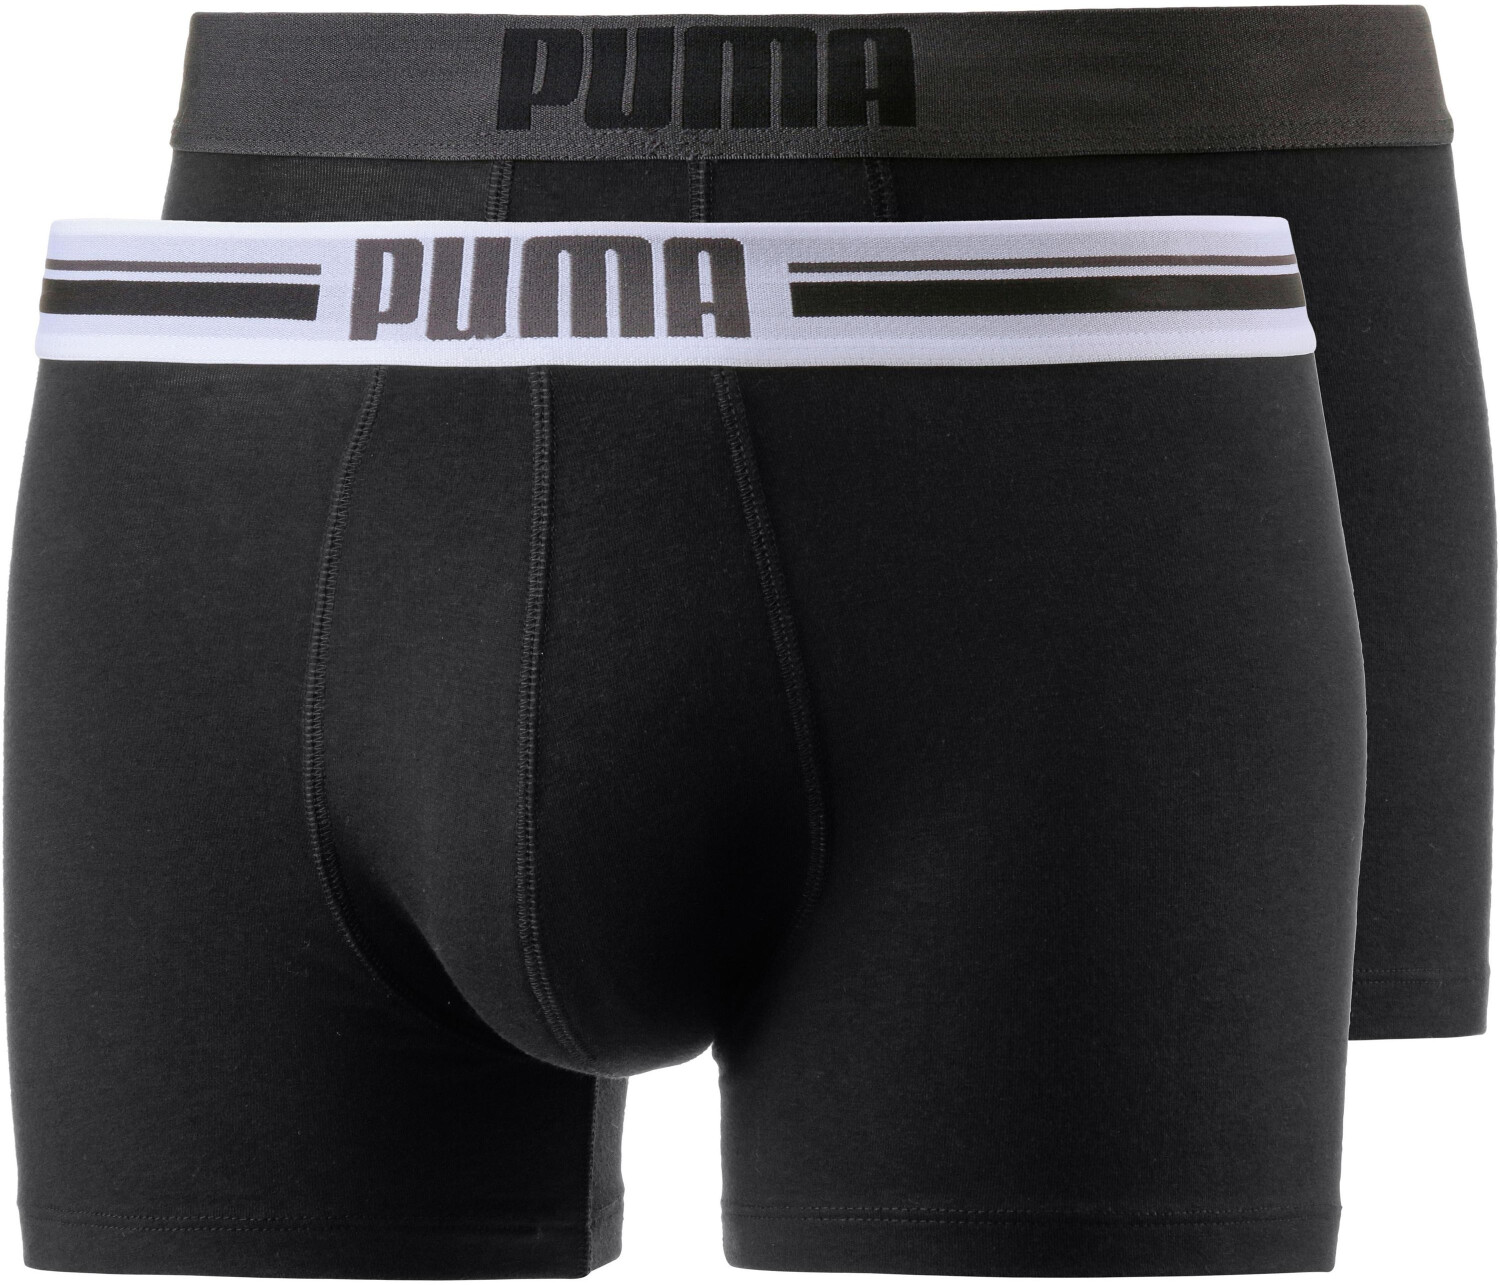 Calzoncillos bóxer Puma Placed Logo Boxer 4 PACK 